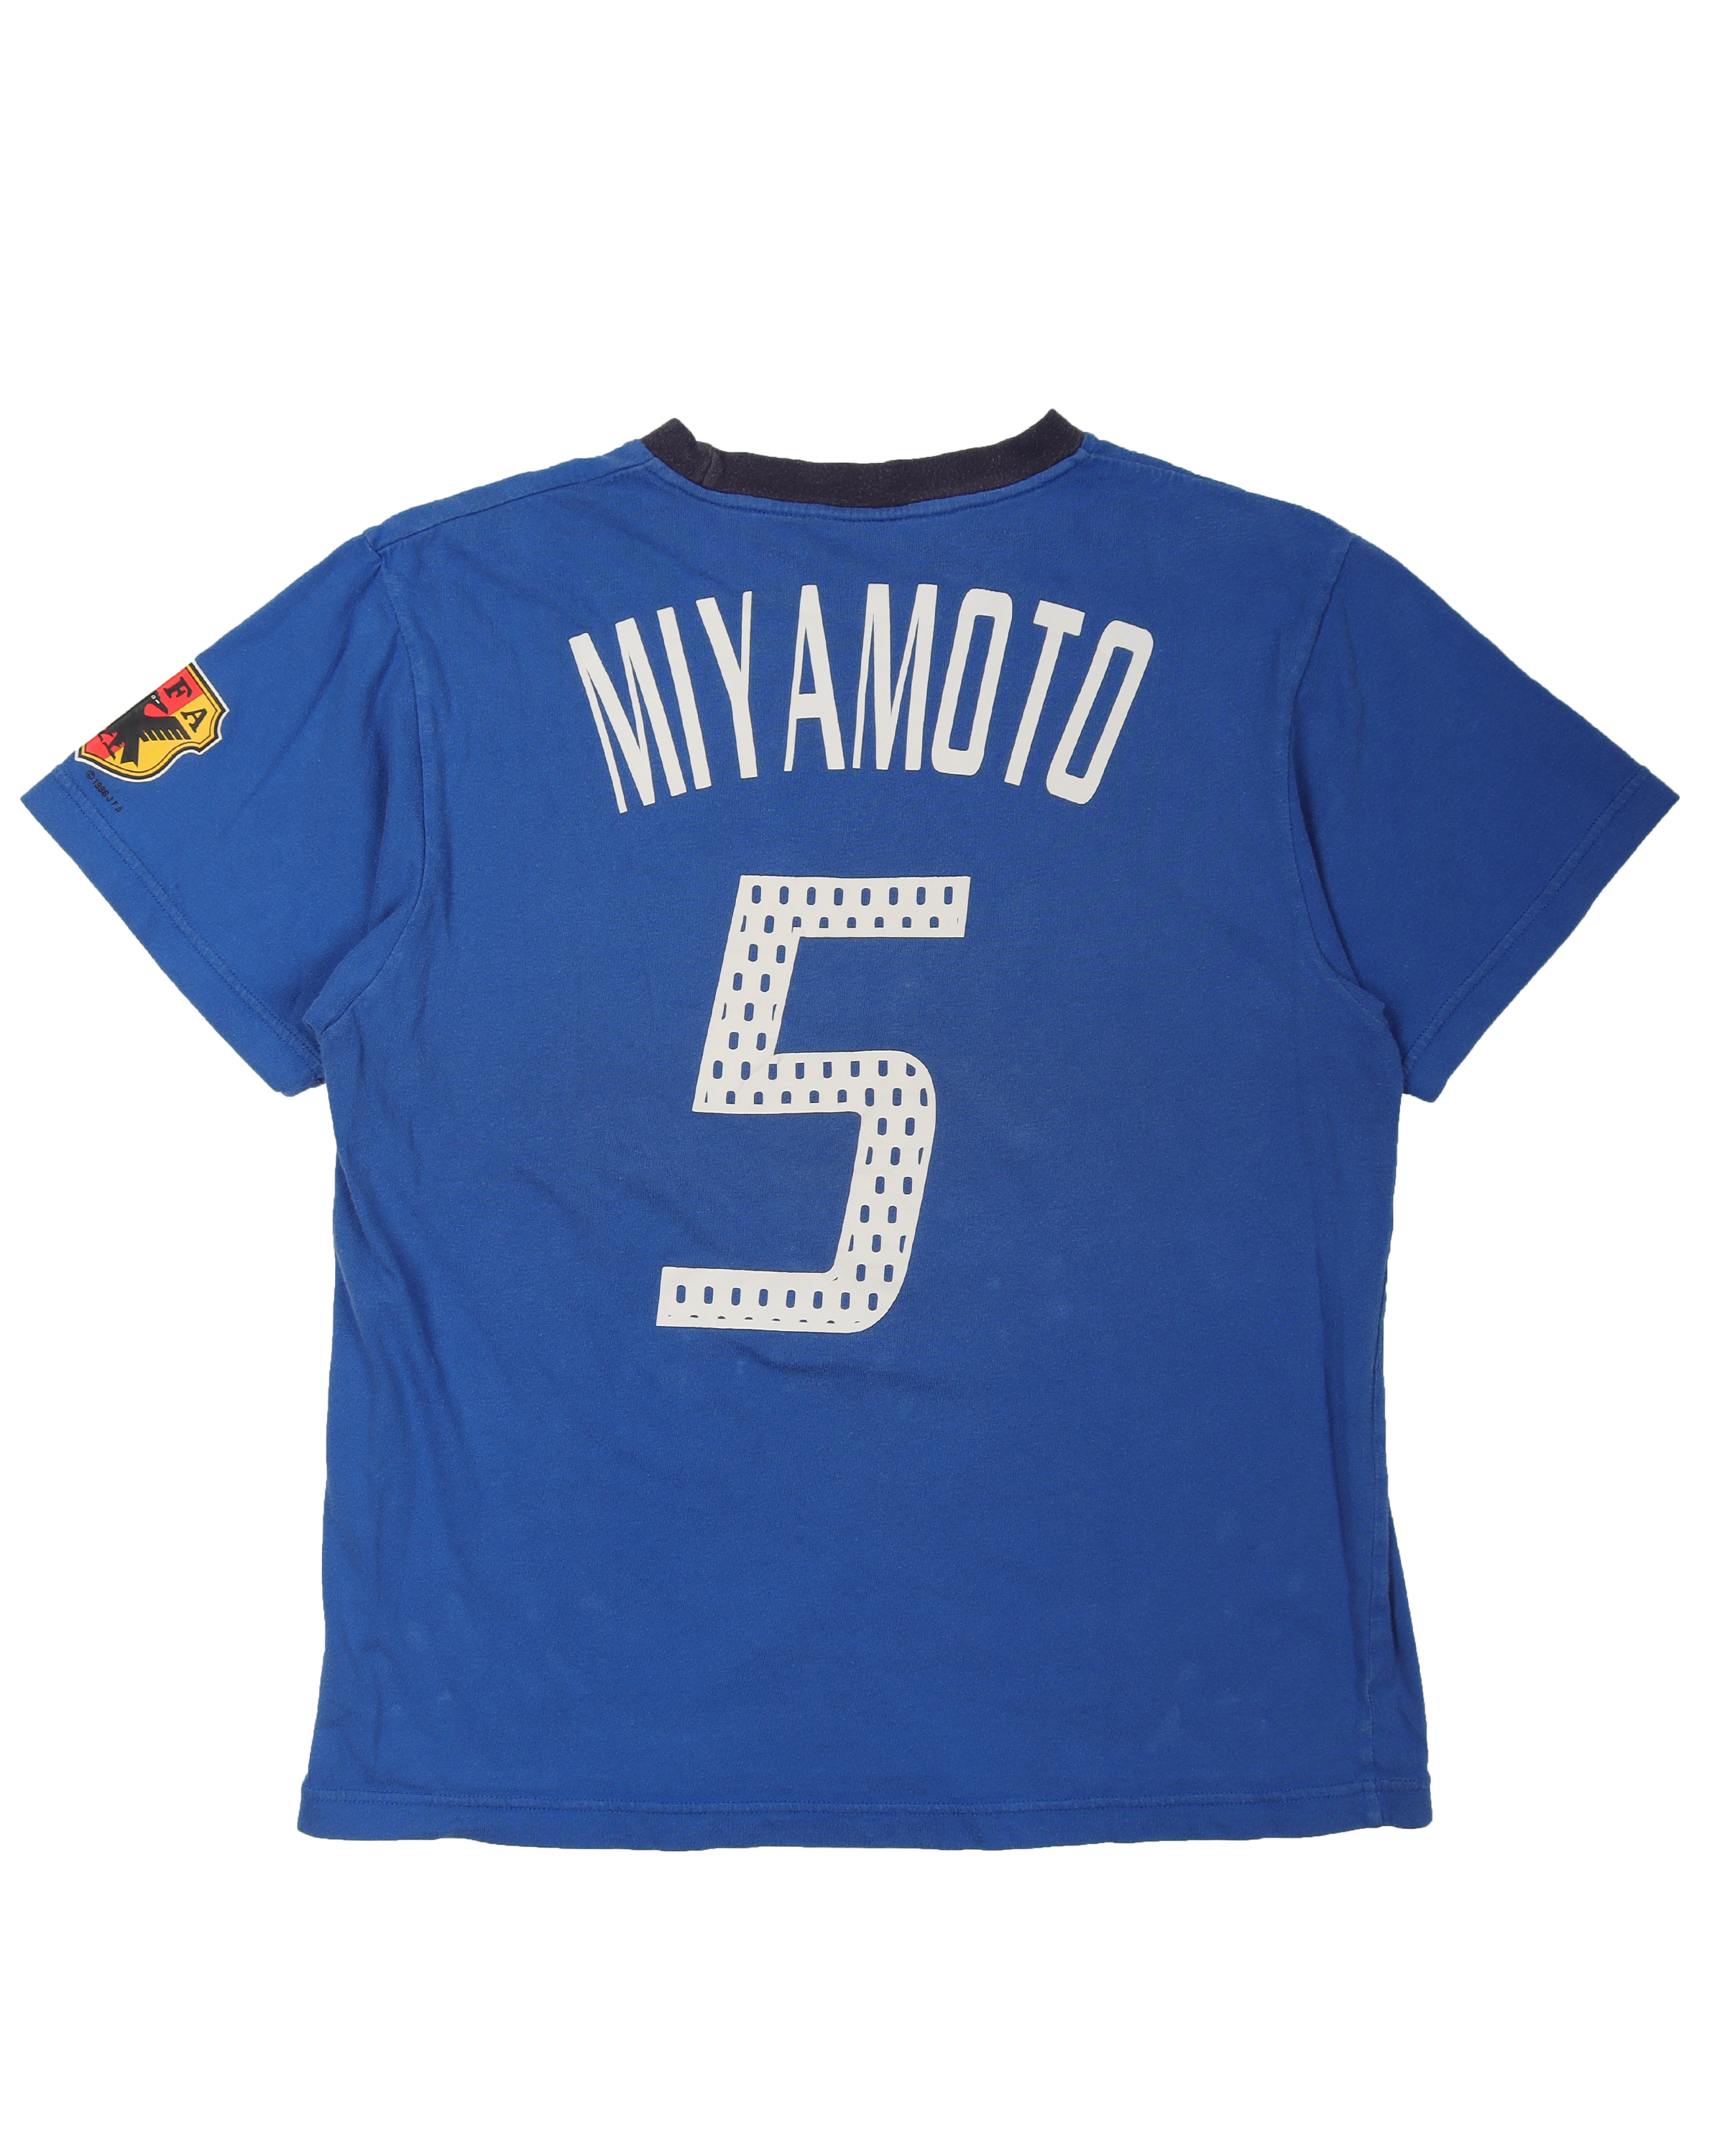 Adidas "Miyamoto" T-Shirt